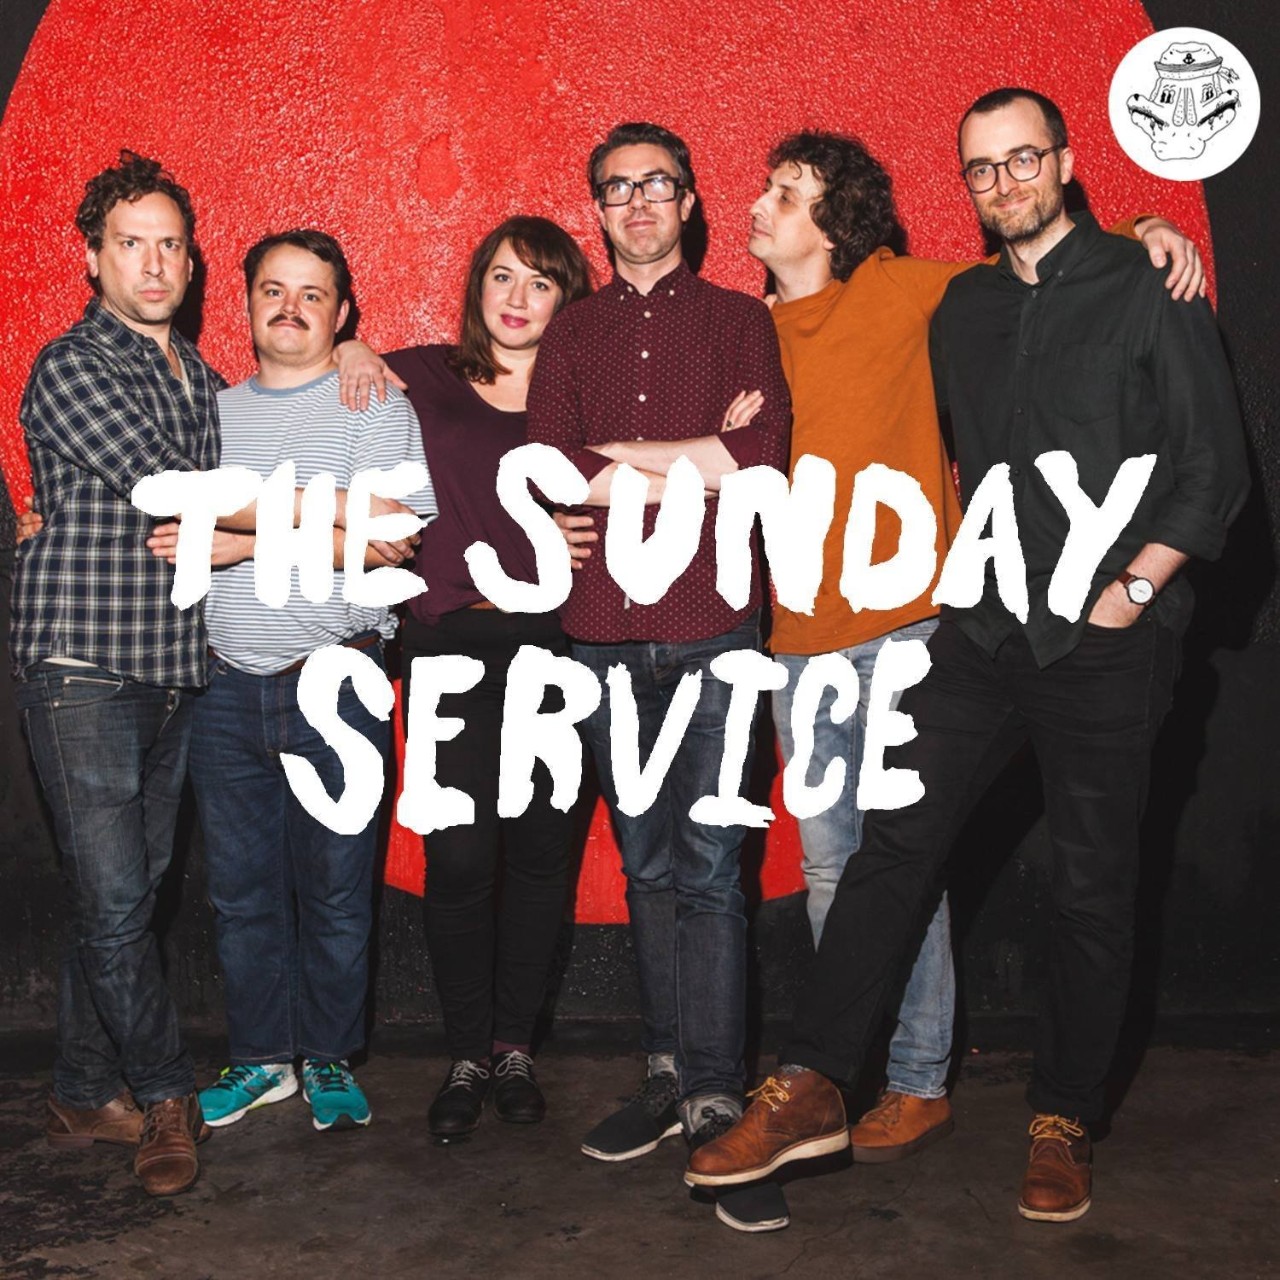 The Sunday Service group shot